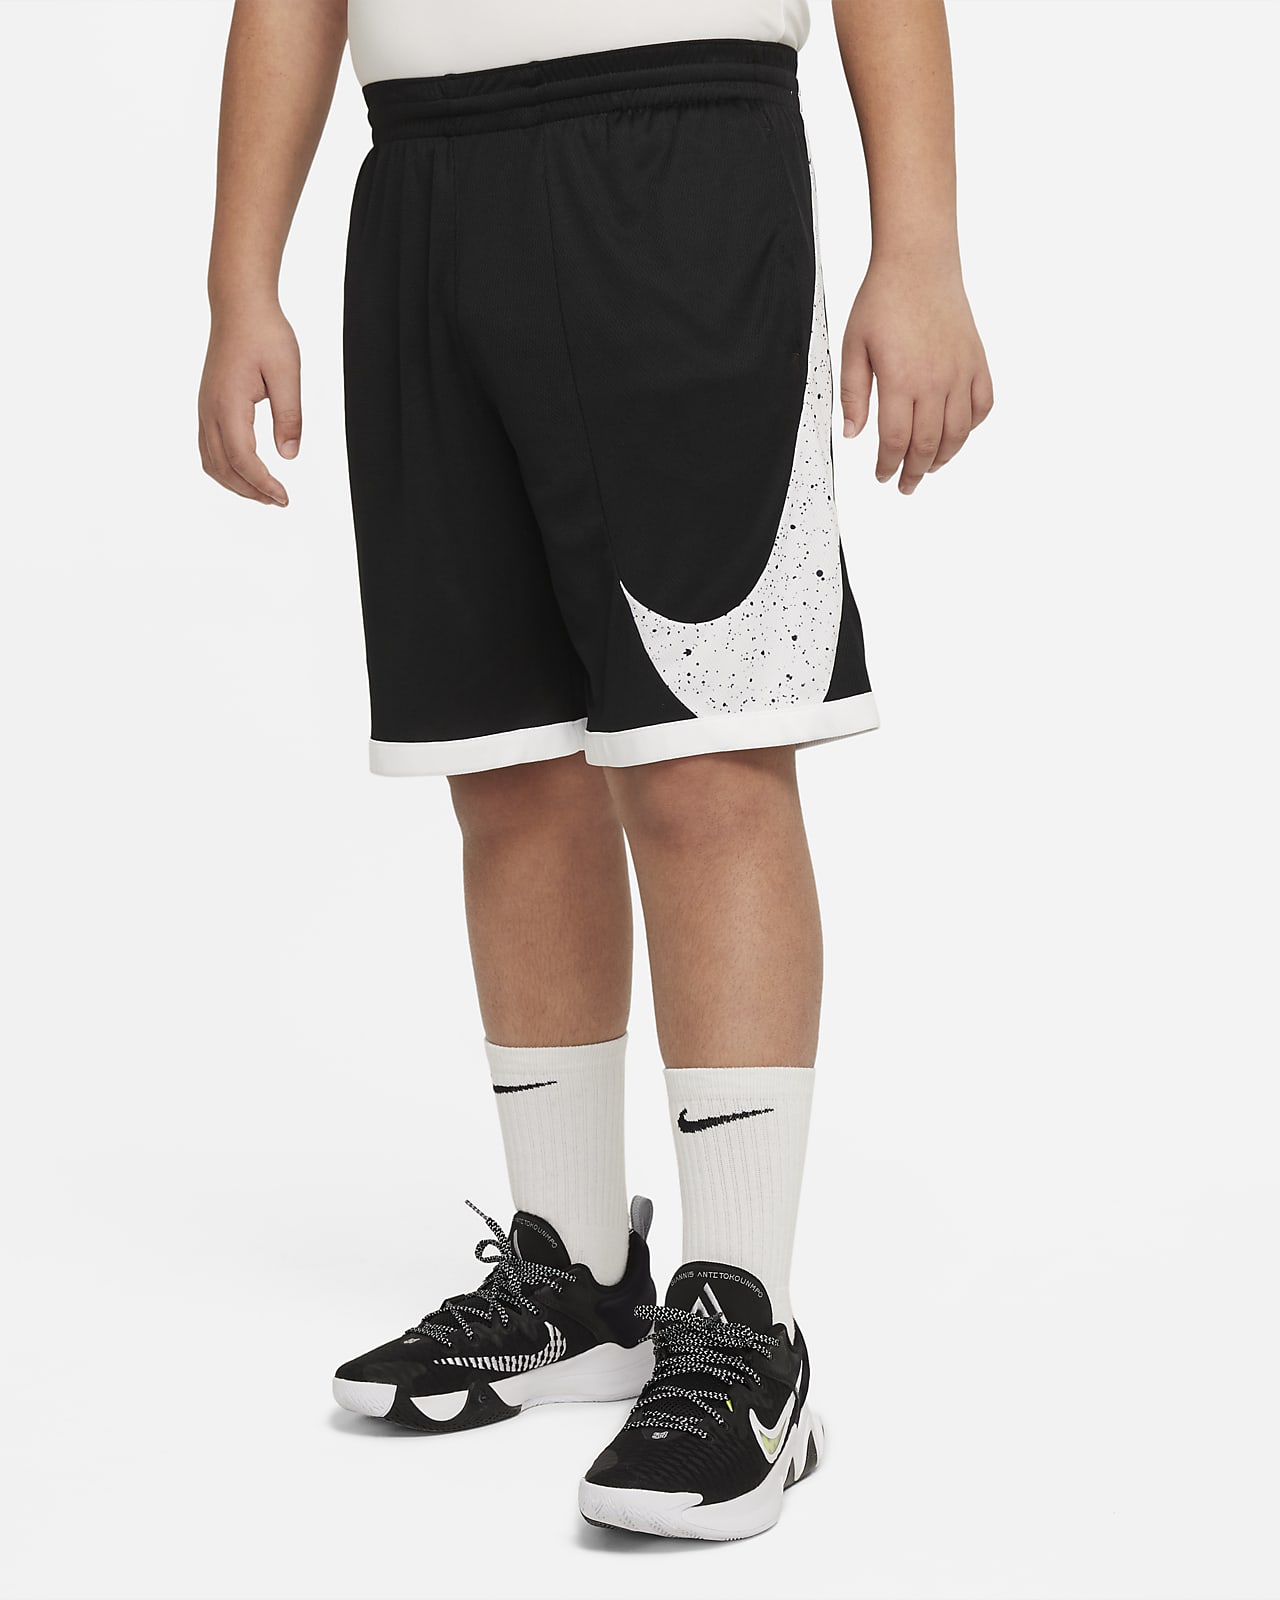 Nike Dri-FIT Big Kids' (Boys') Printed Basketball Shorts (Extended Size)